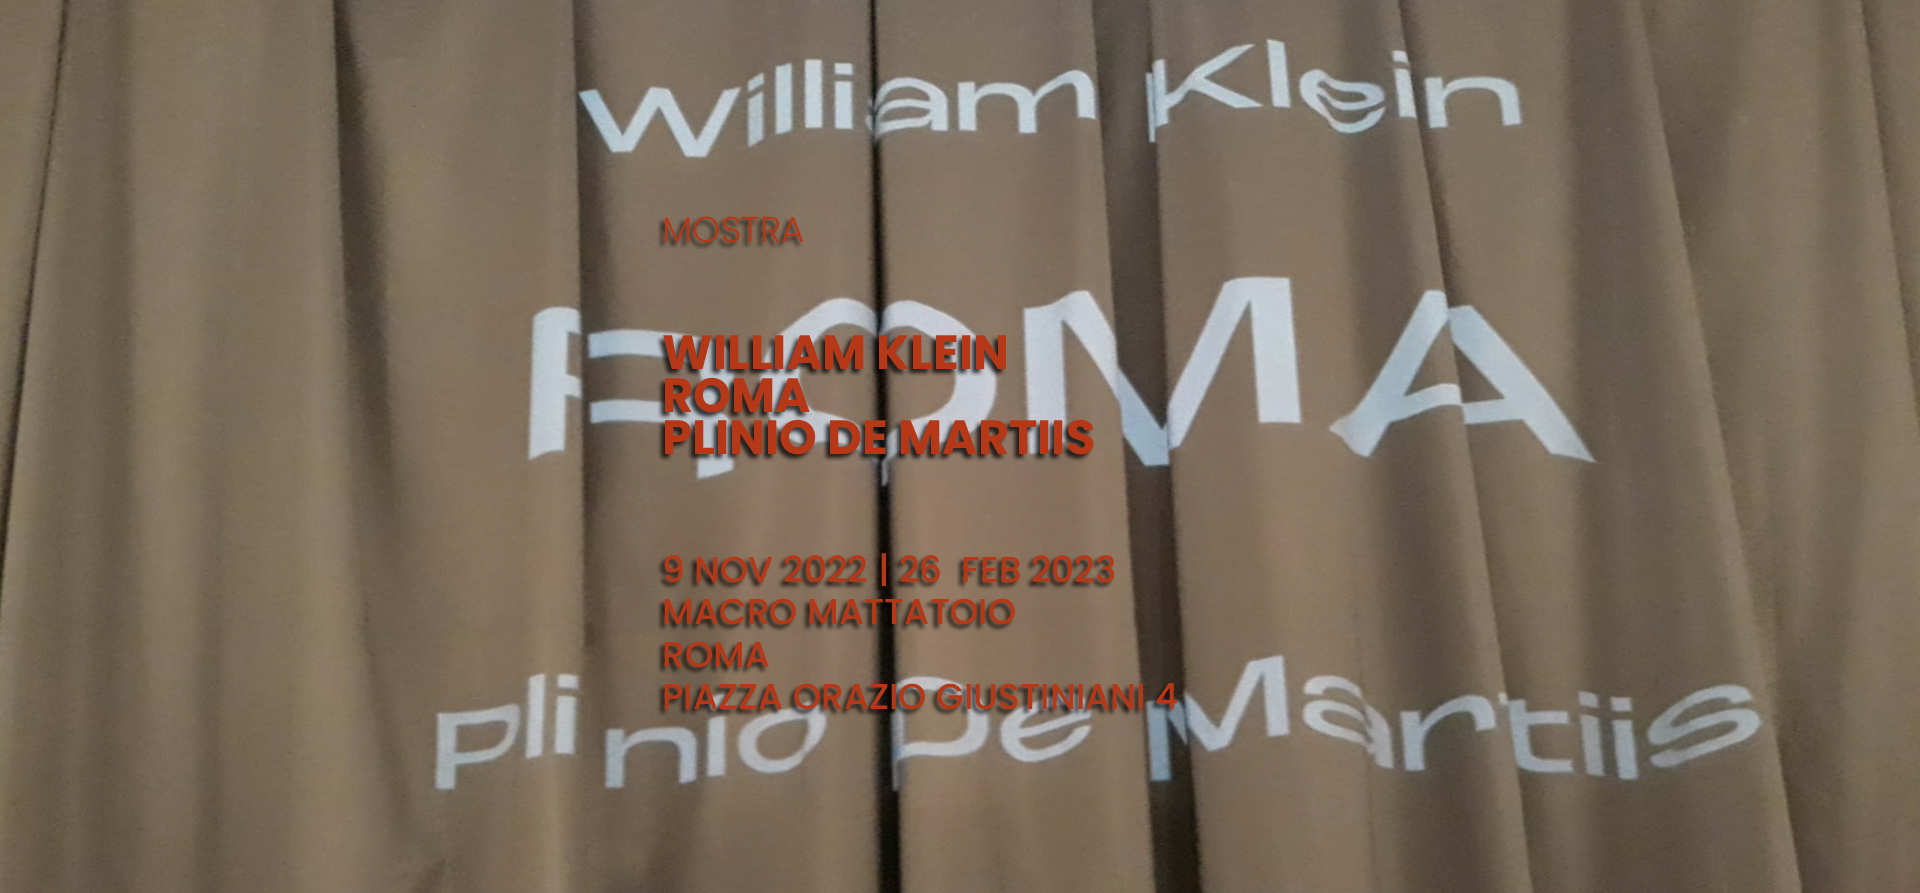 WILLIAM KLEIN ROMA PLINIO DE MARTIIS